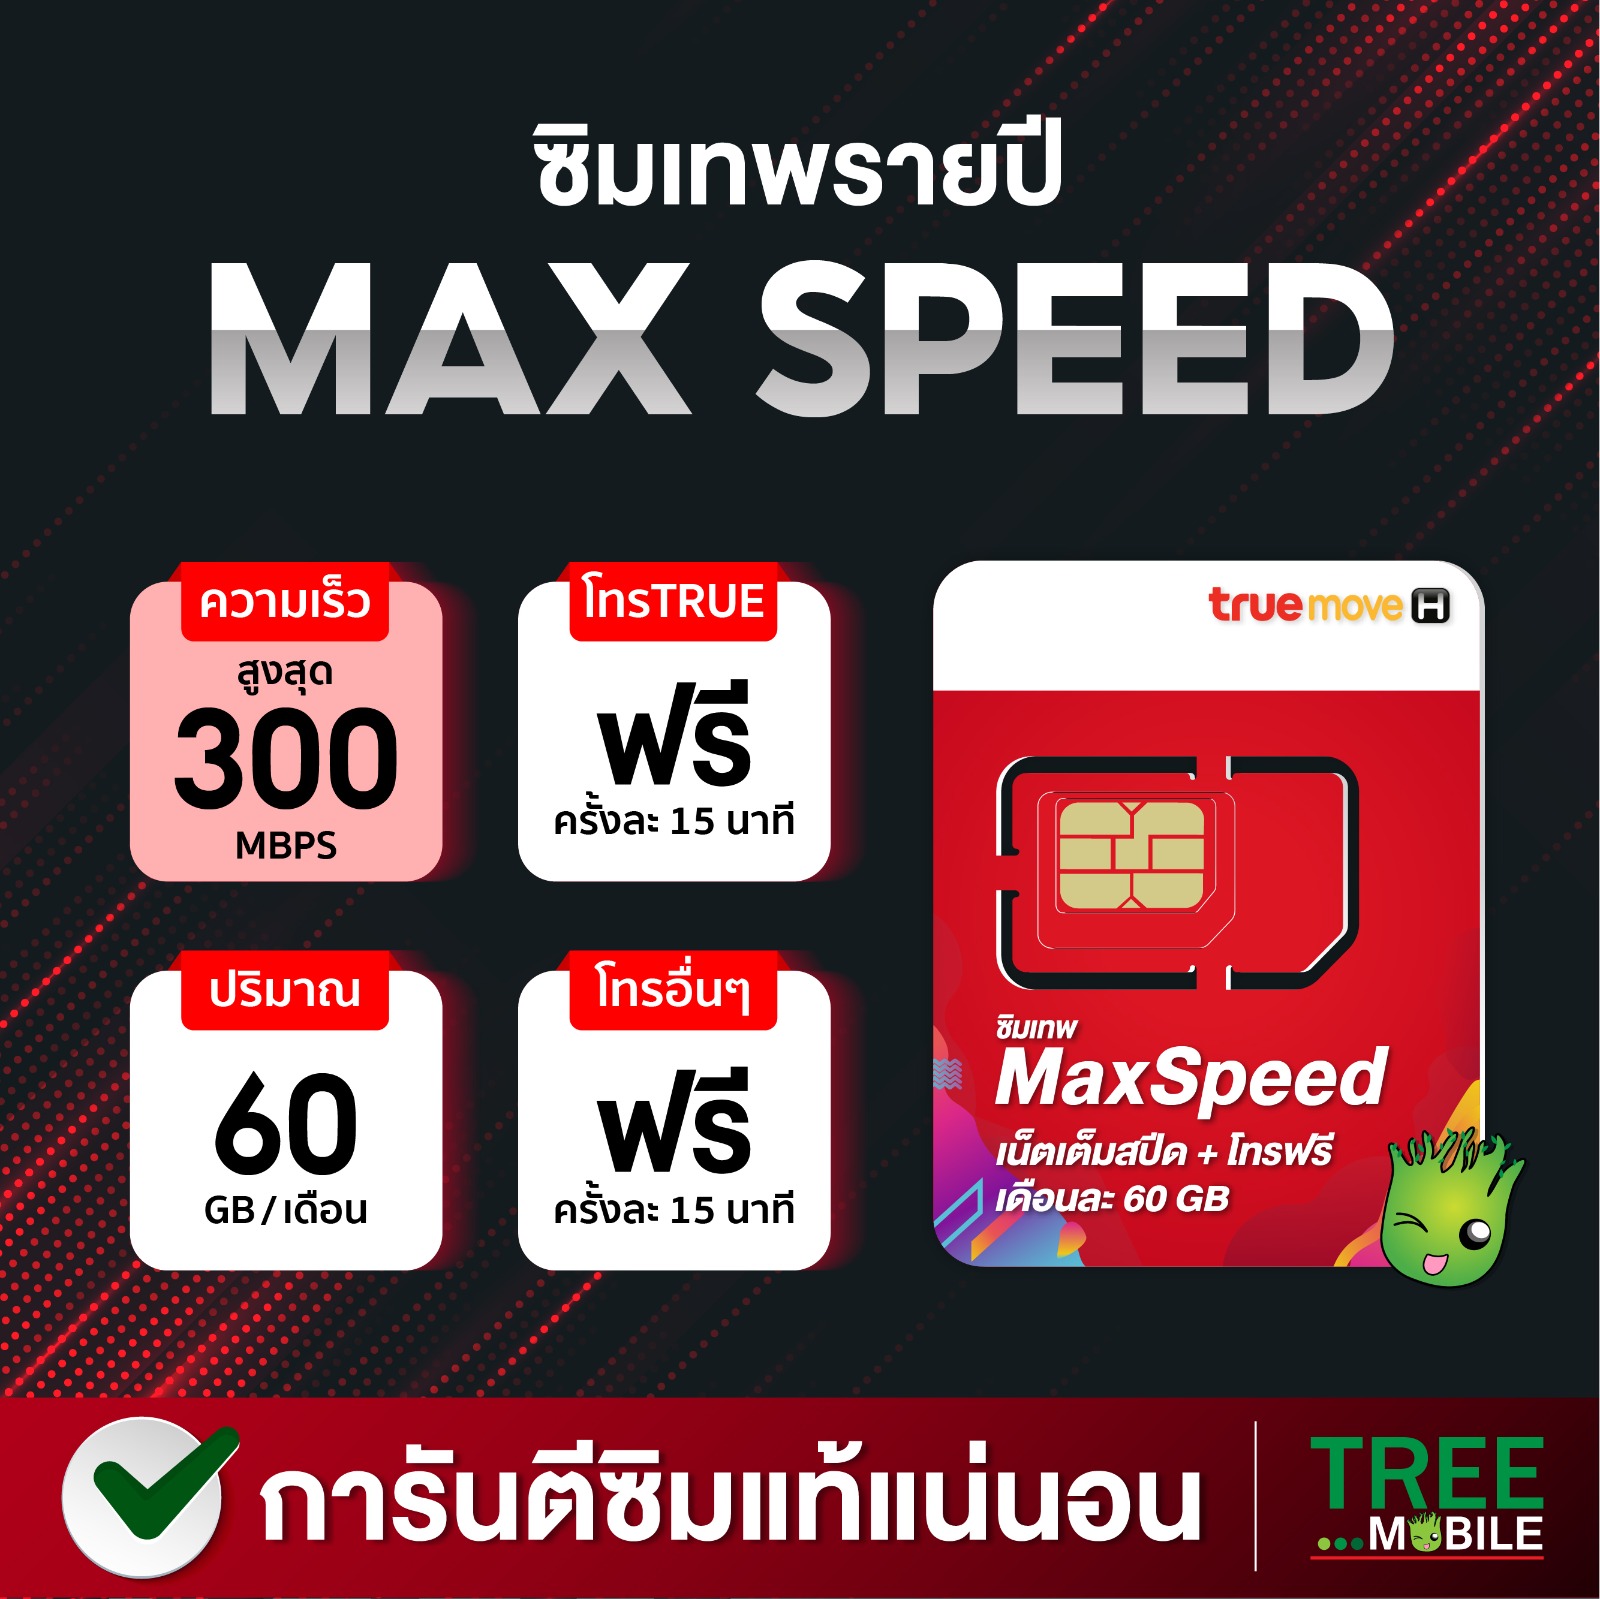 True MaxSpeed ซิมเทพทรู ซิมเน็ตเทพ ซิมรายปี Max Speed 60 เน็ตฟรี 60กิ๊ก เดือน โทรฟรีไม่อั้น ทุกเครือข่าย ไม่ต้องเติมเงิน ซิมรายปี ซิมเน็ต TreeMobile